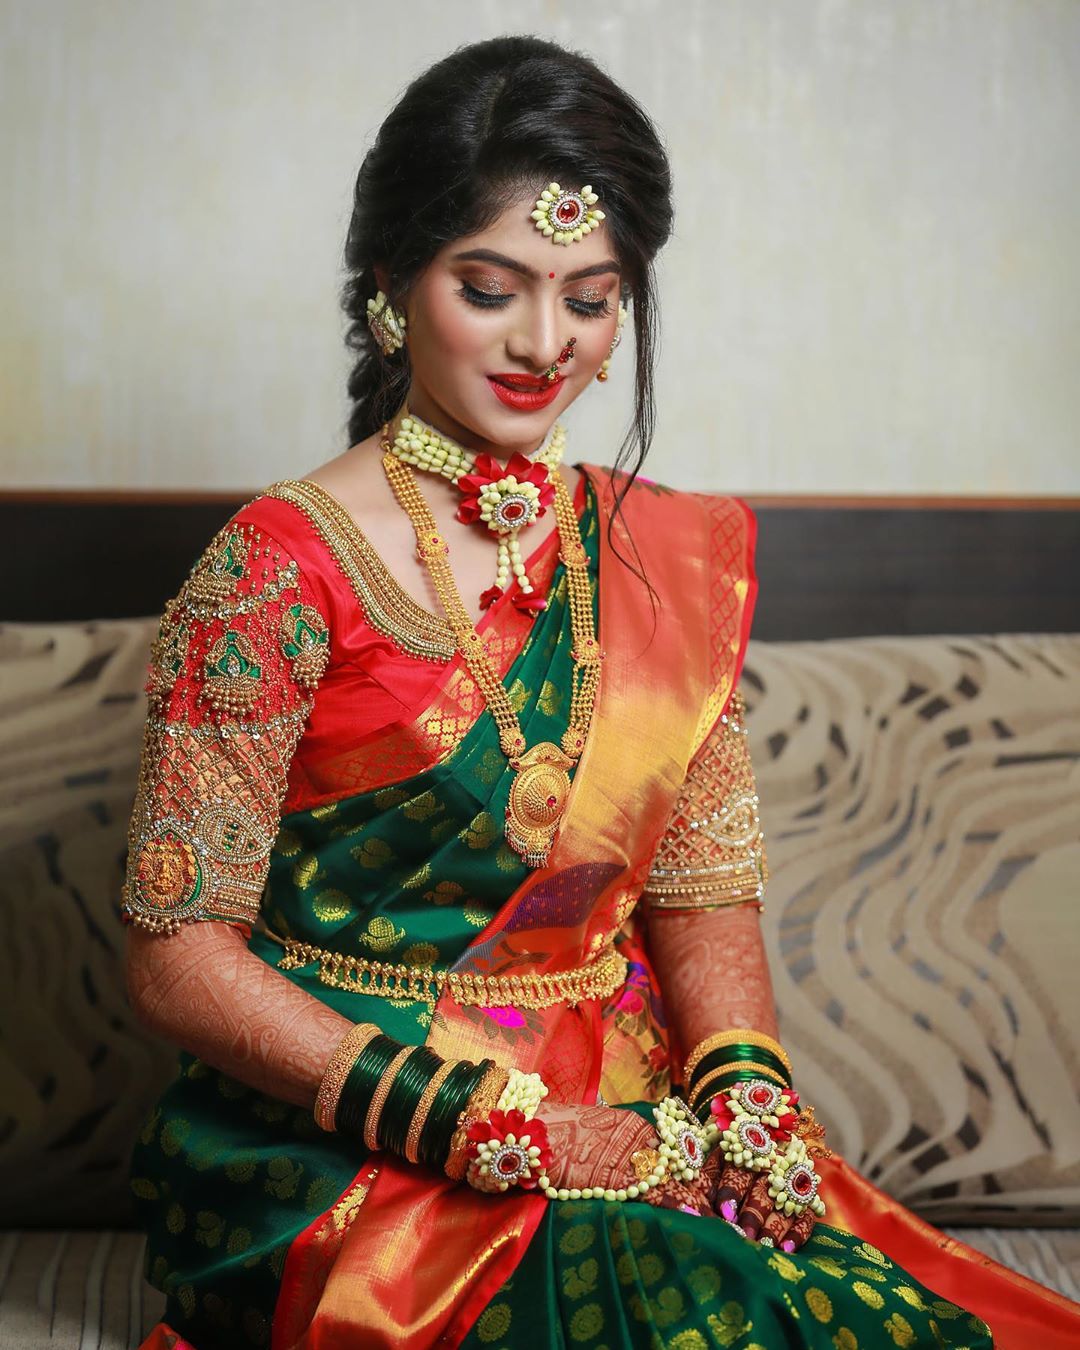 Most Stunning Maharashtrian Brides We